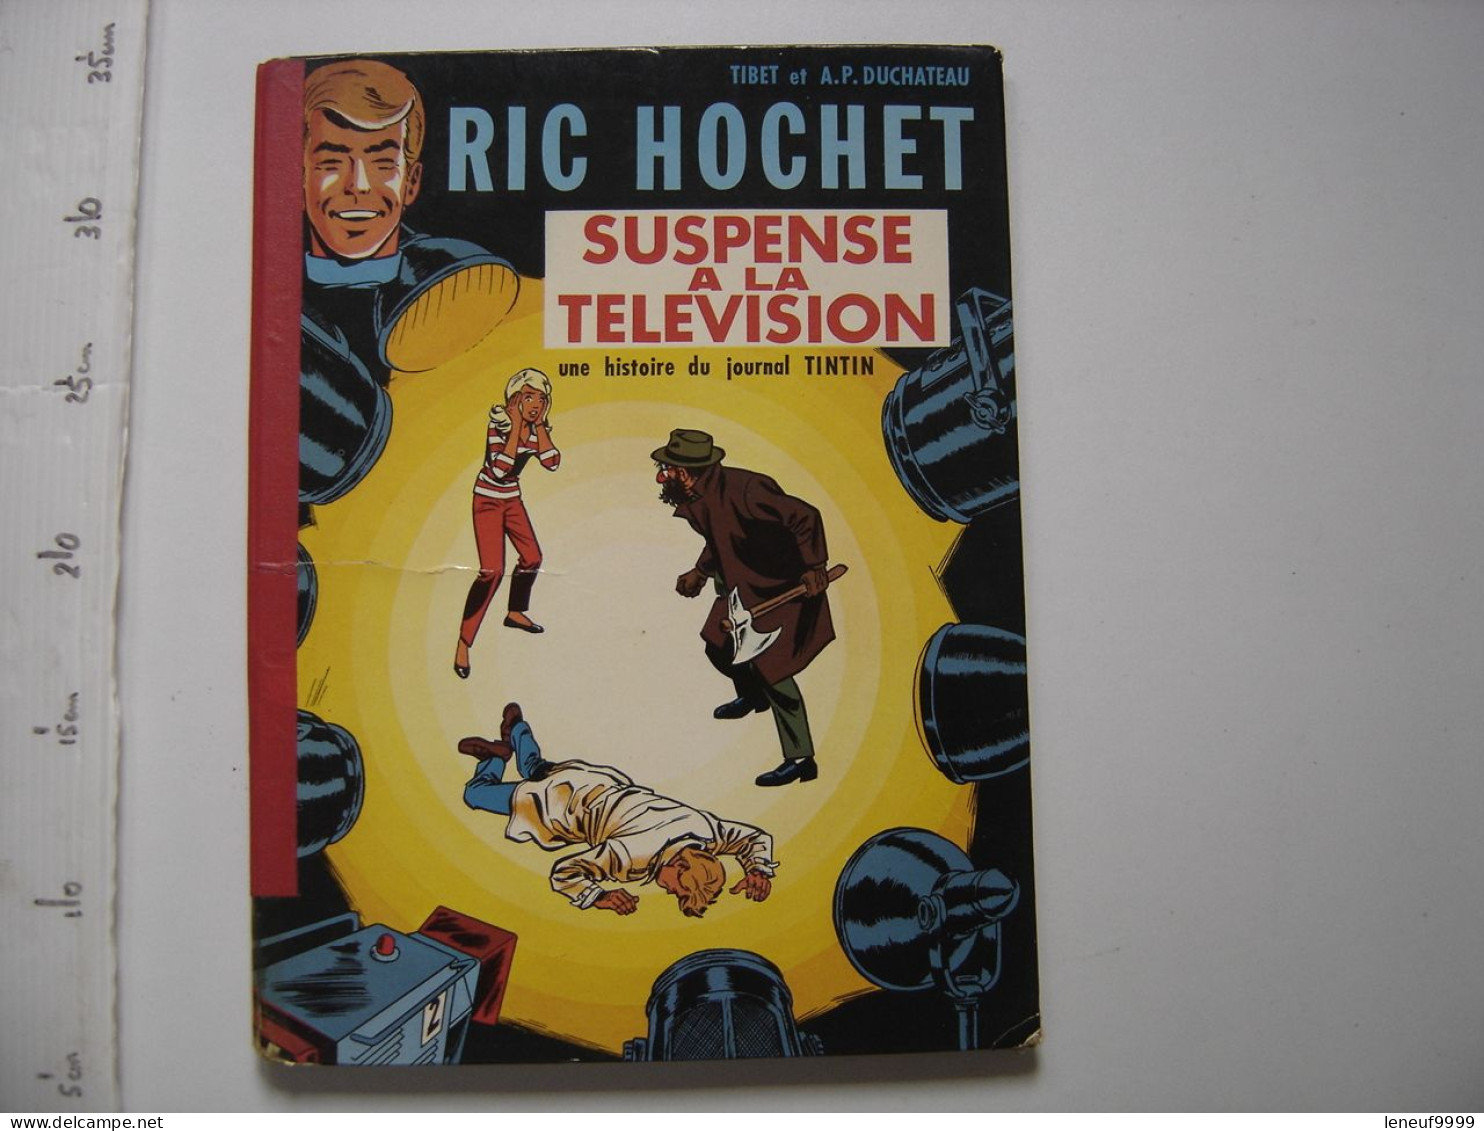 1968 SUSPENSE A LA TELEVISION RIC HOCHET Tibet Duchateau Edition Originale - Ric Hochet